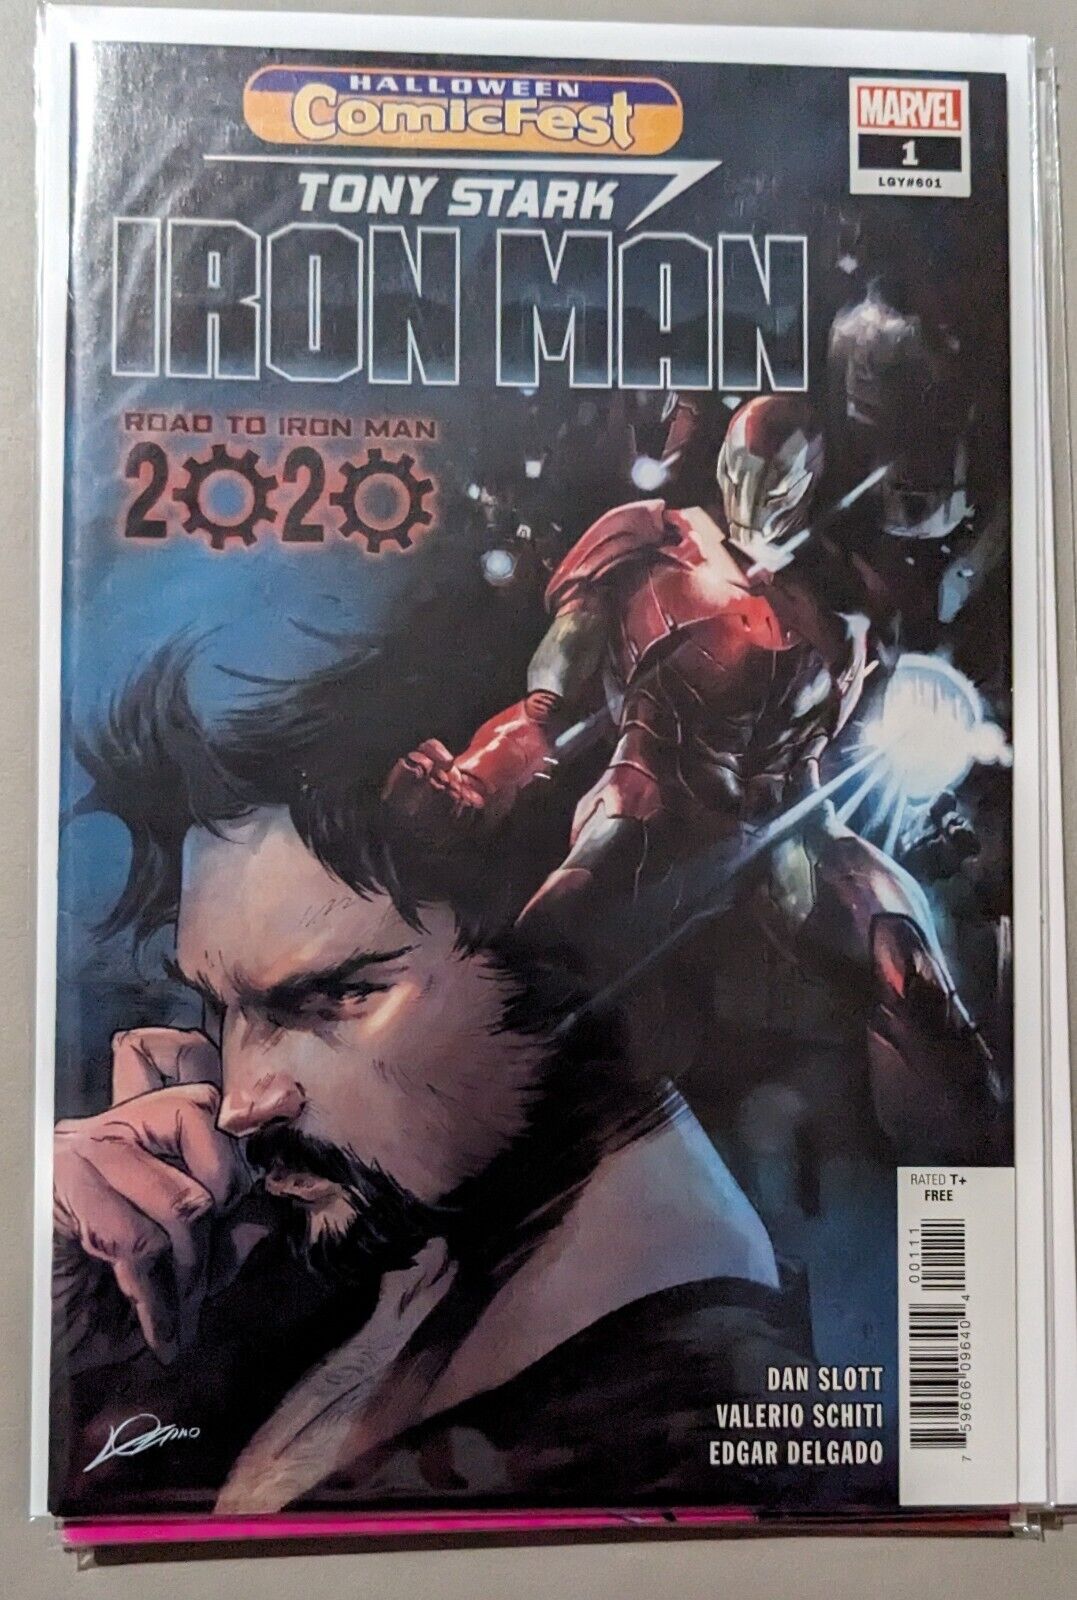 Tony Stark Iron Man Number One Halloween Comic Fest Road To Iron Man 2020